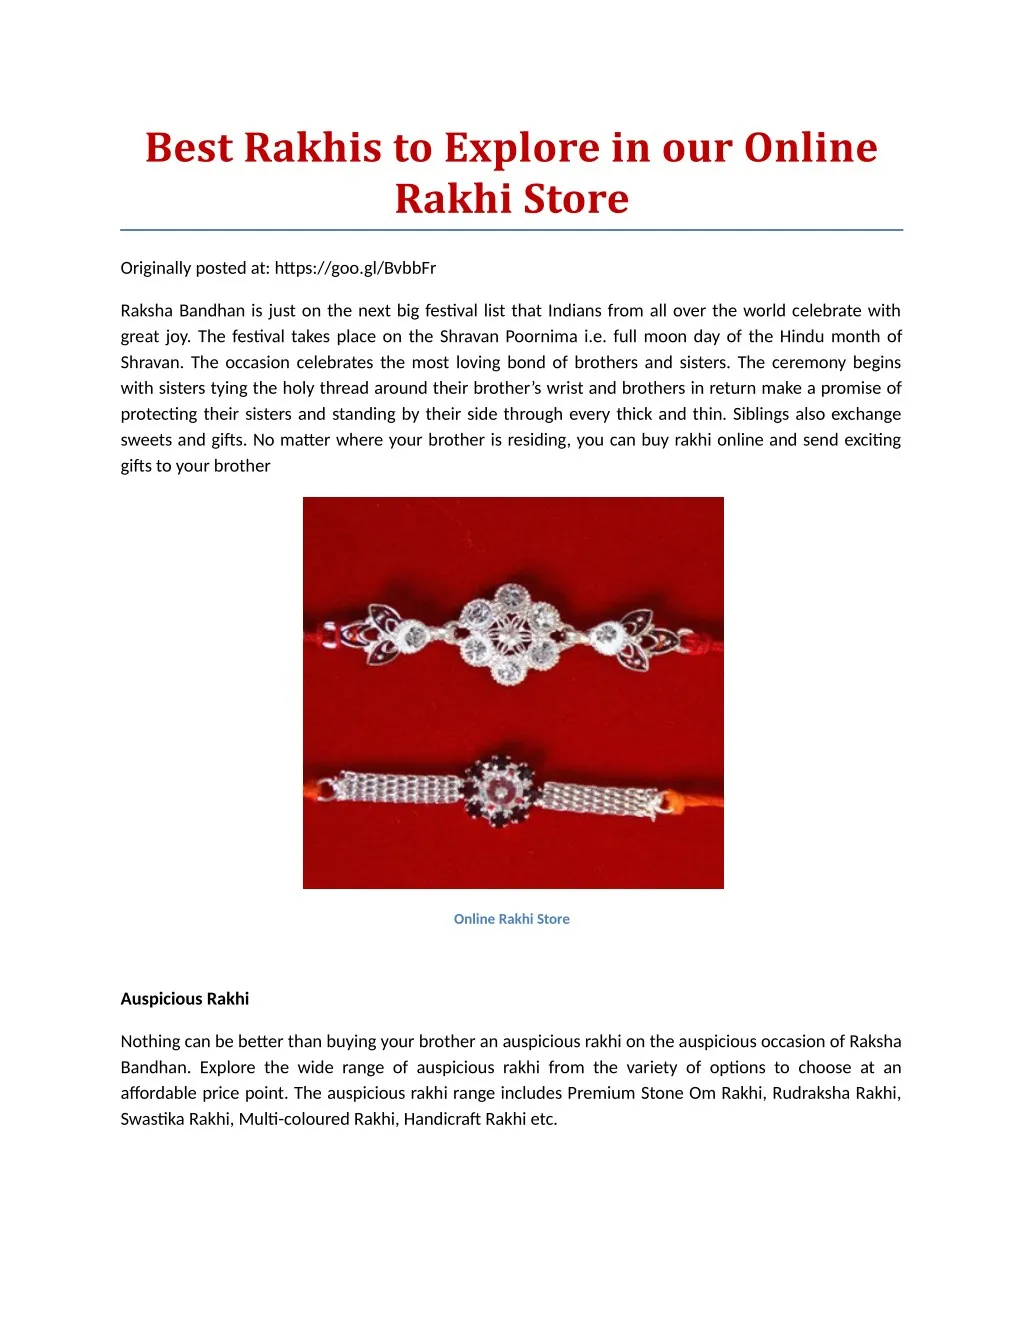 best rakhis to explore in our online rakhi store